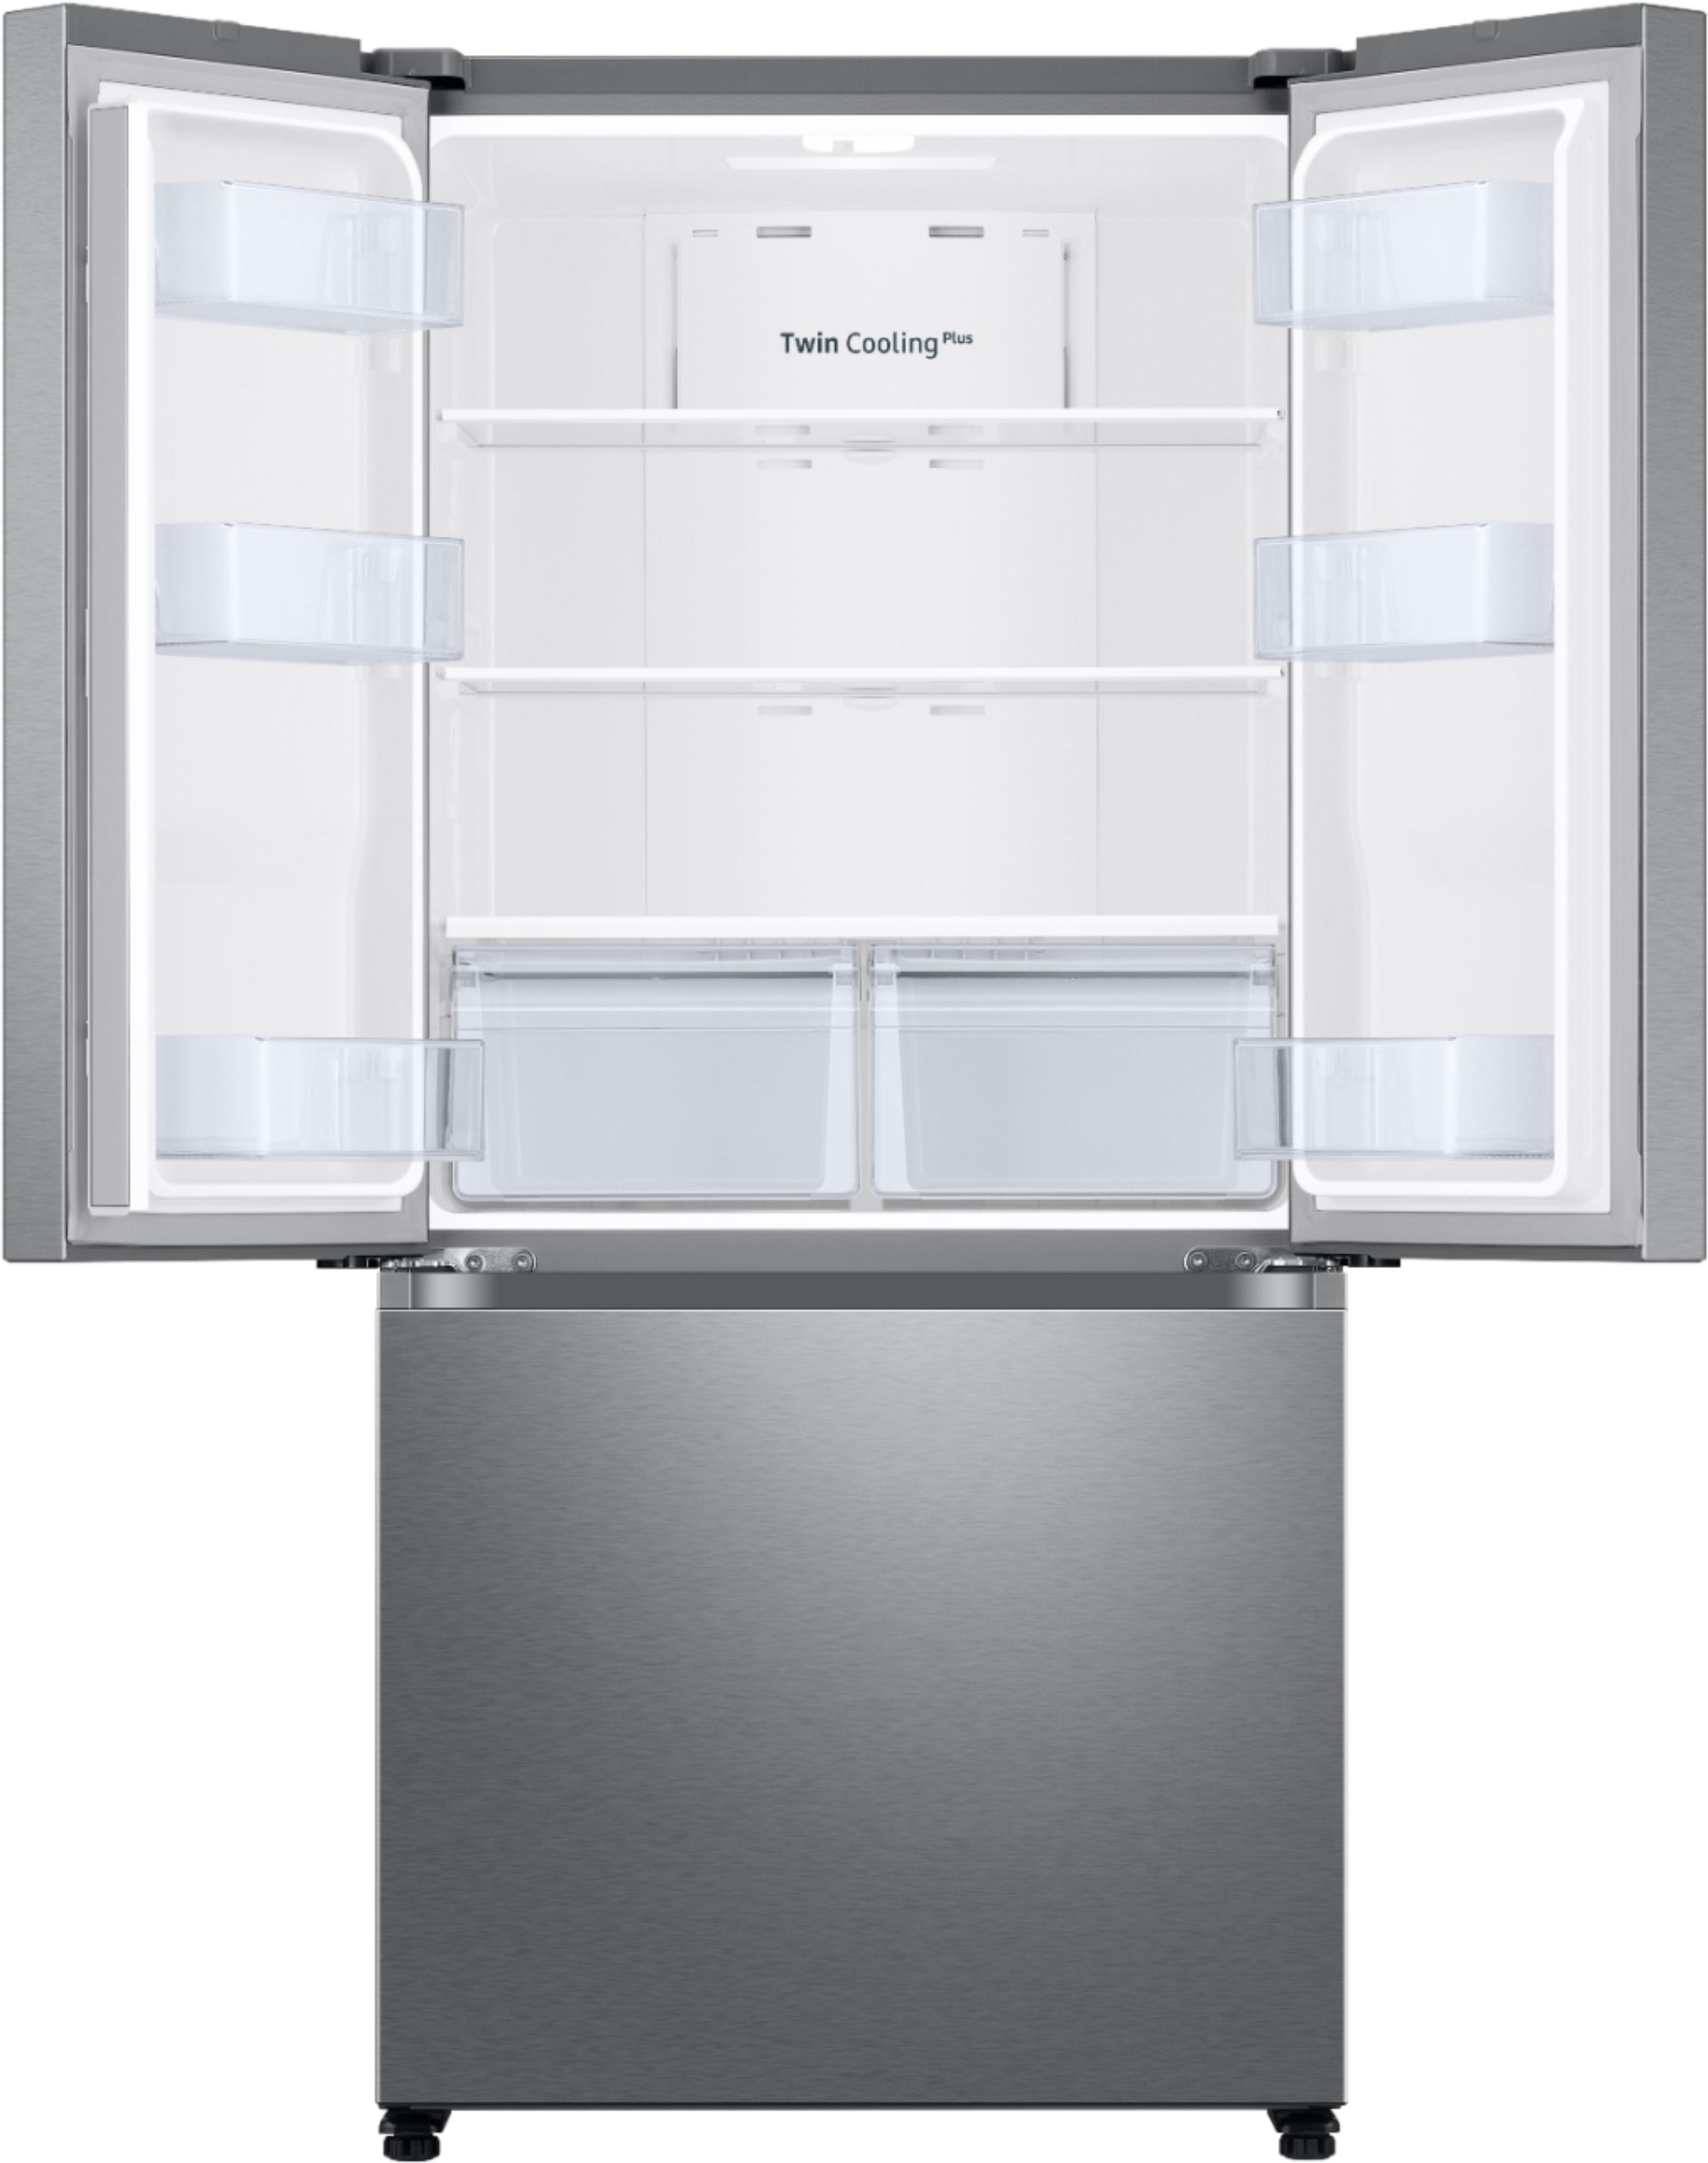 Samsung 17.5 Cu. Ft. French Door Refrigerator in Black Stainless Steel